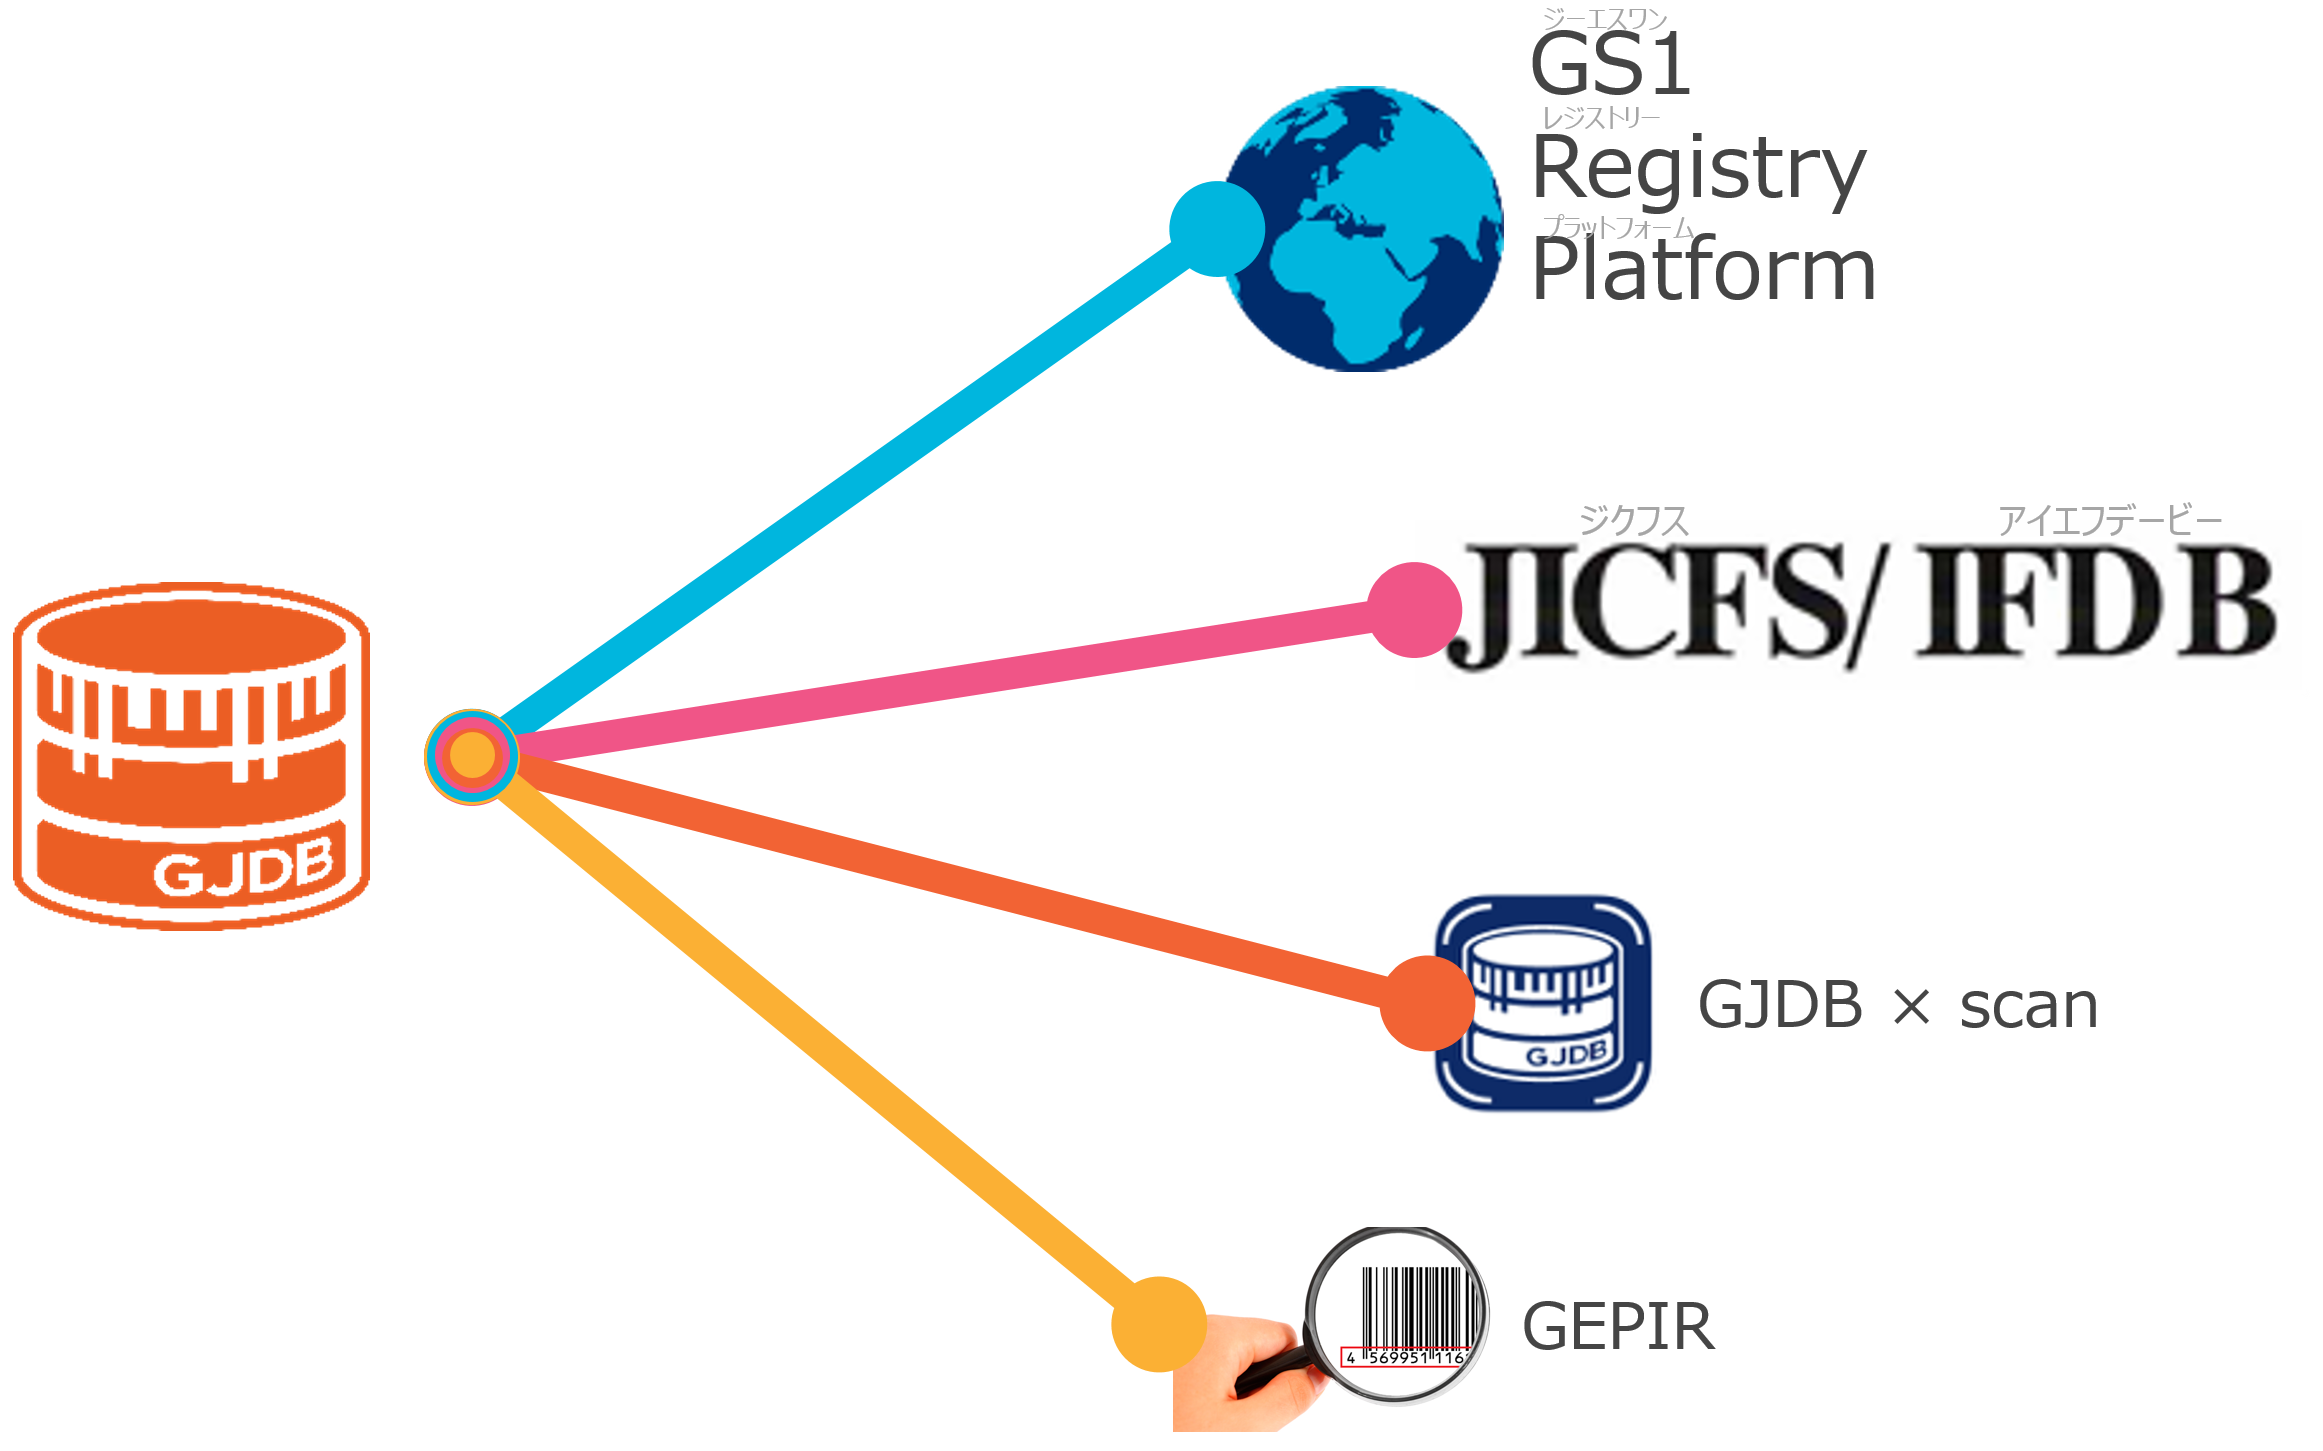 GS1 Japanに関連する国内外のデータベースにシームレスに連携